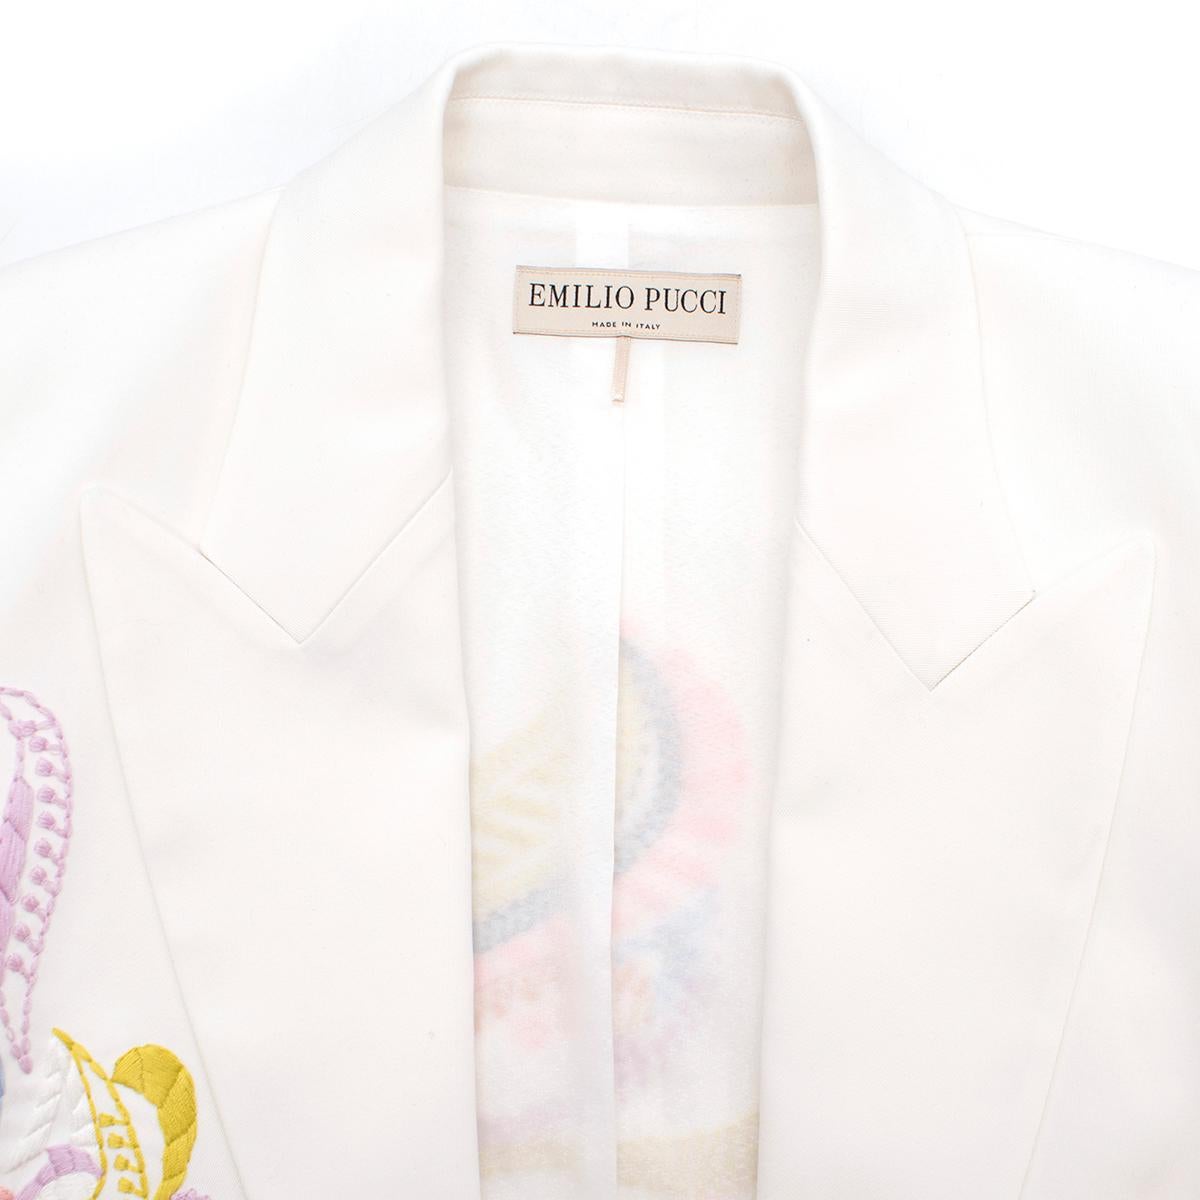  Emilio Pucci embroidered white twill blazer US 8 In Excellent Condition For Sale In London, GB